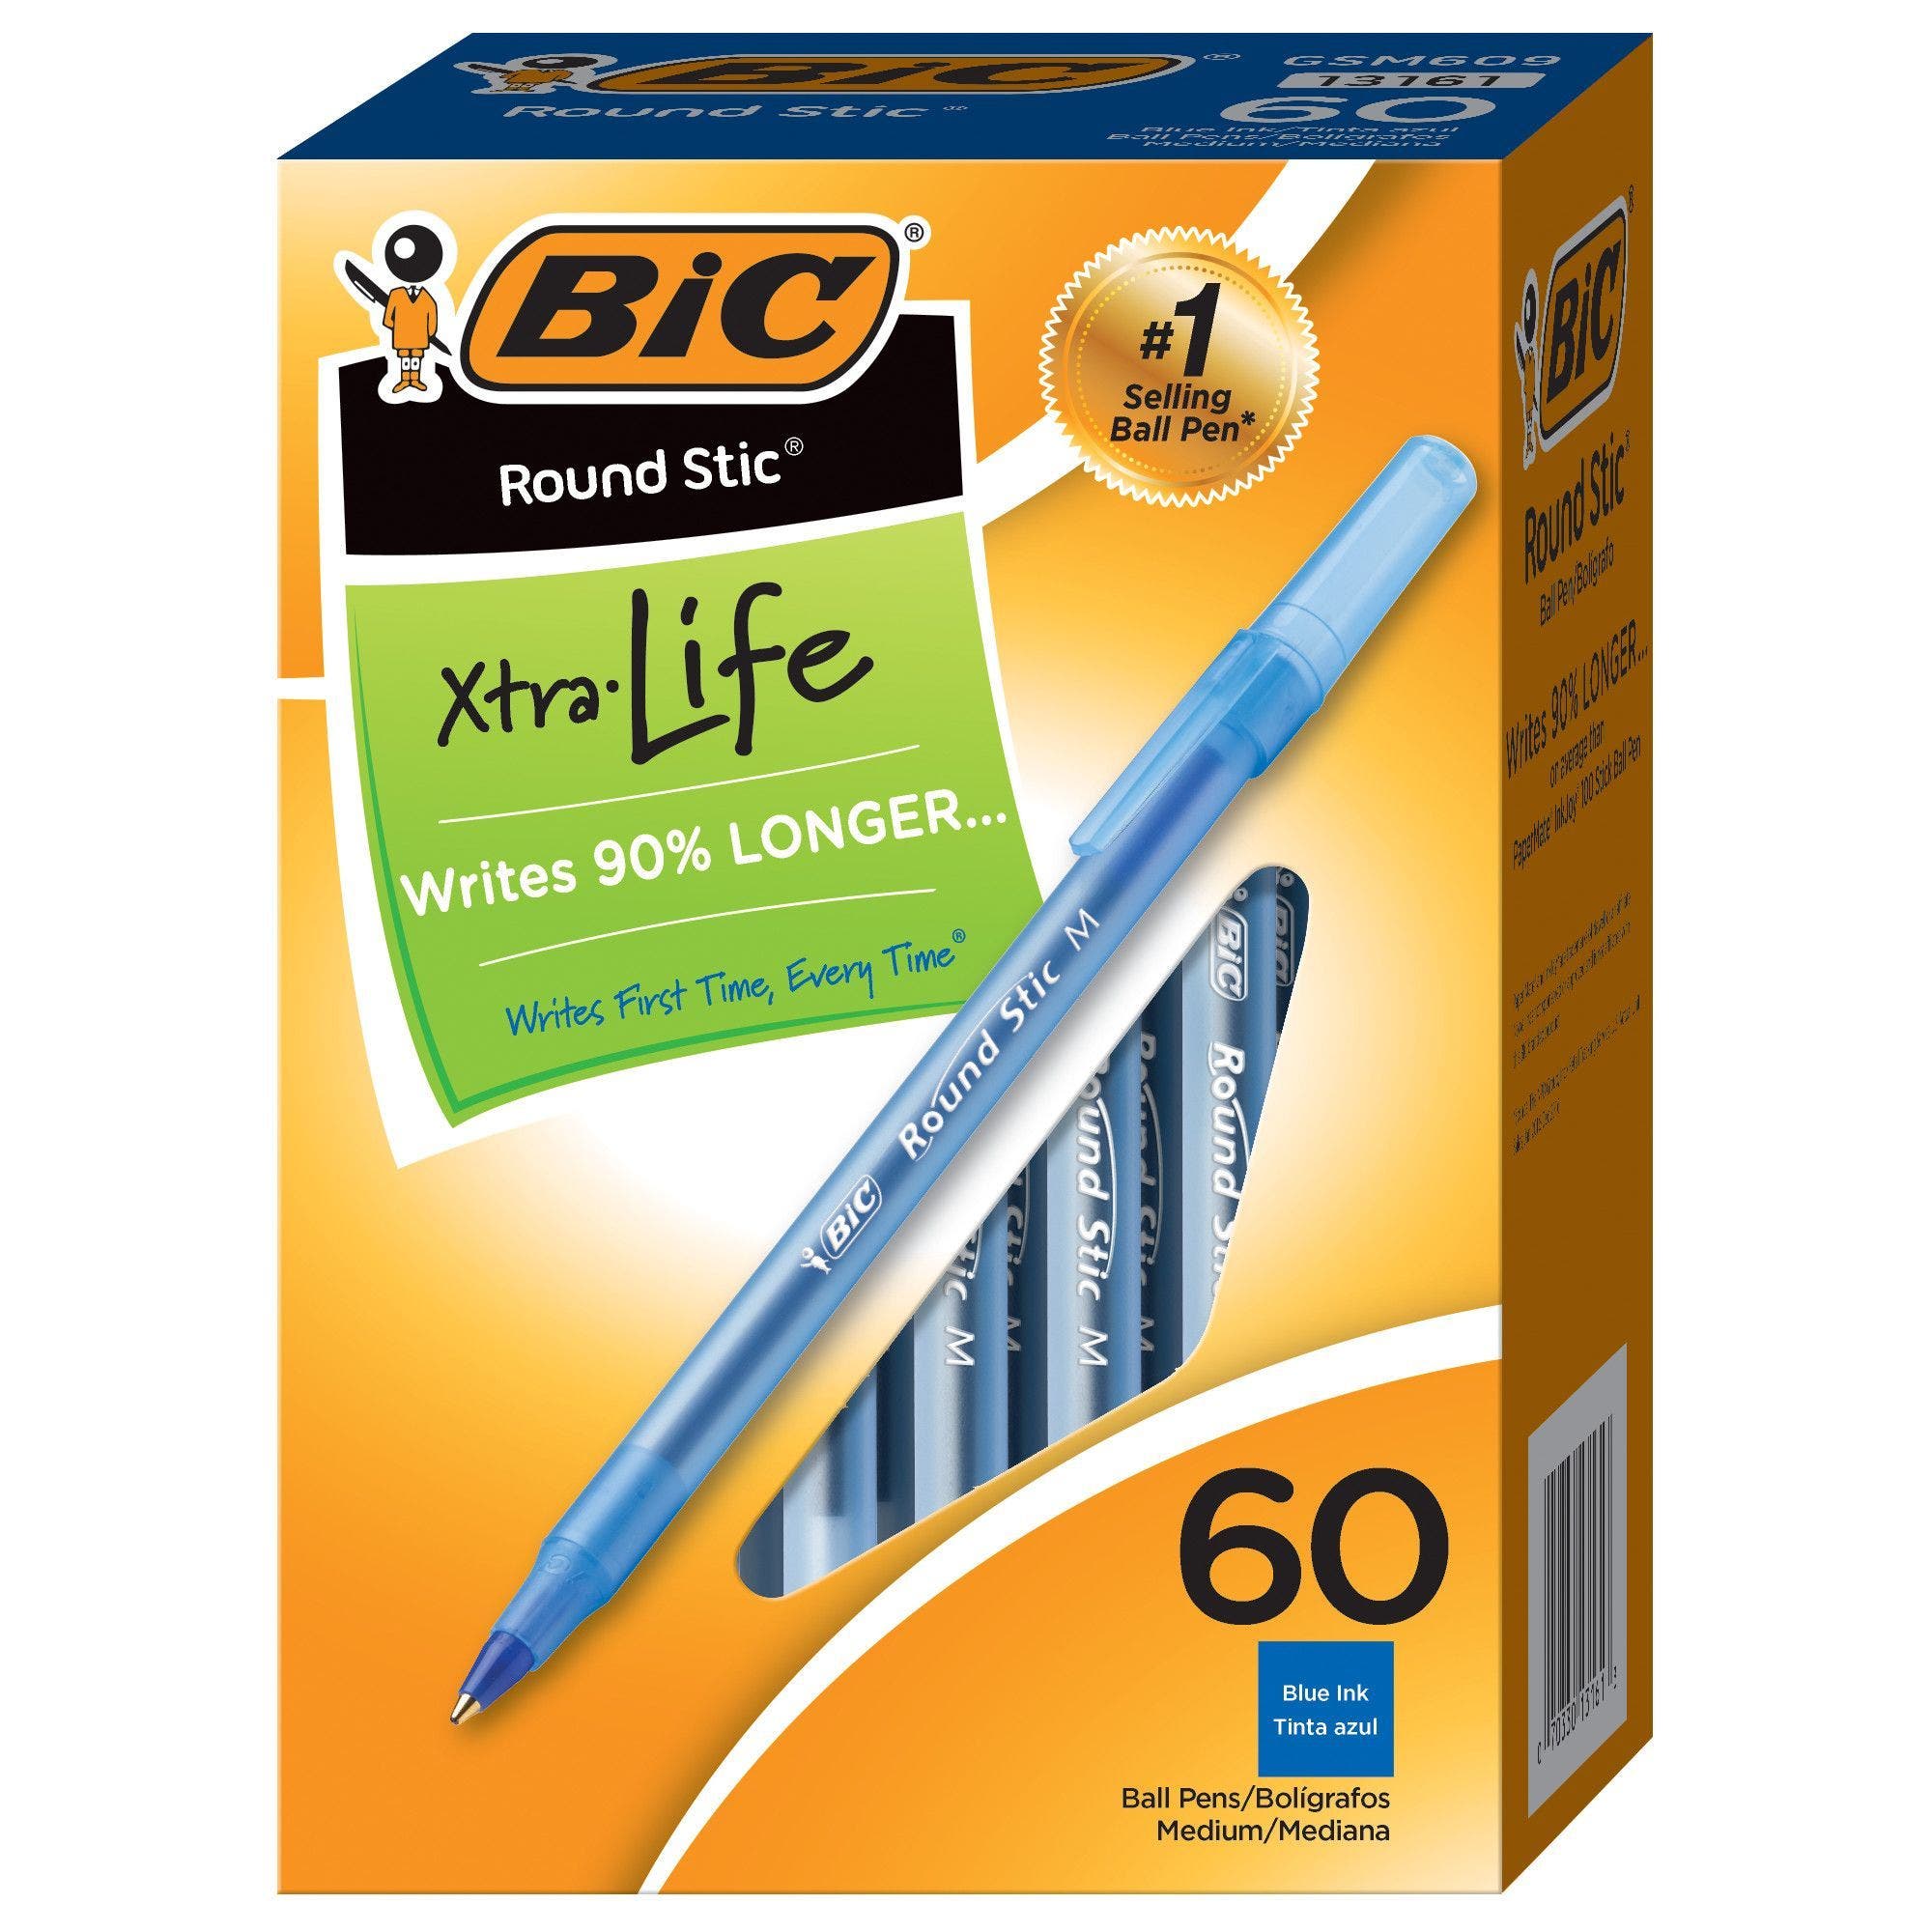 Bic Stationery Gelocity Highlighter Cristal Intensity Fine liner Ballpoint Pen 